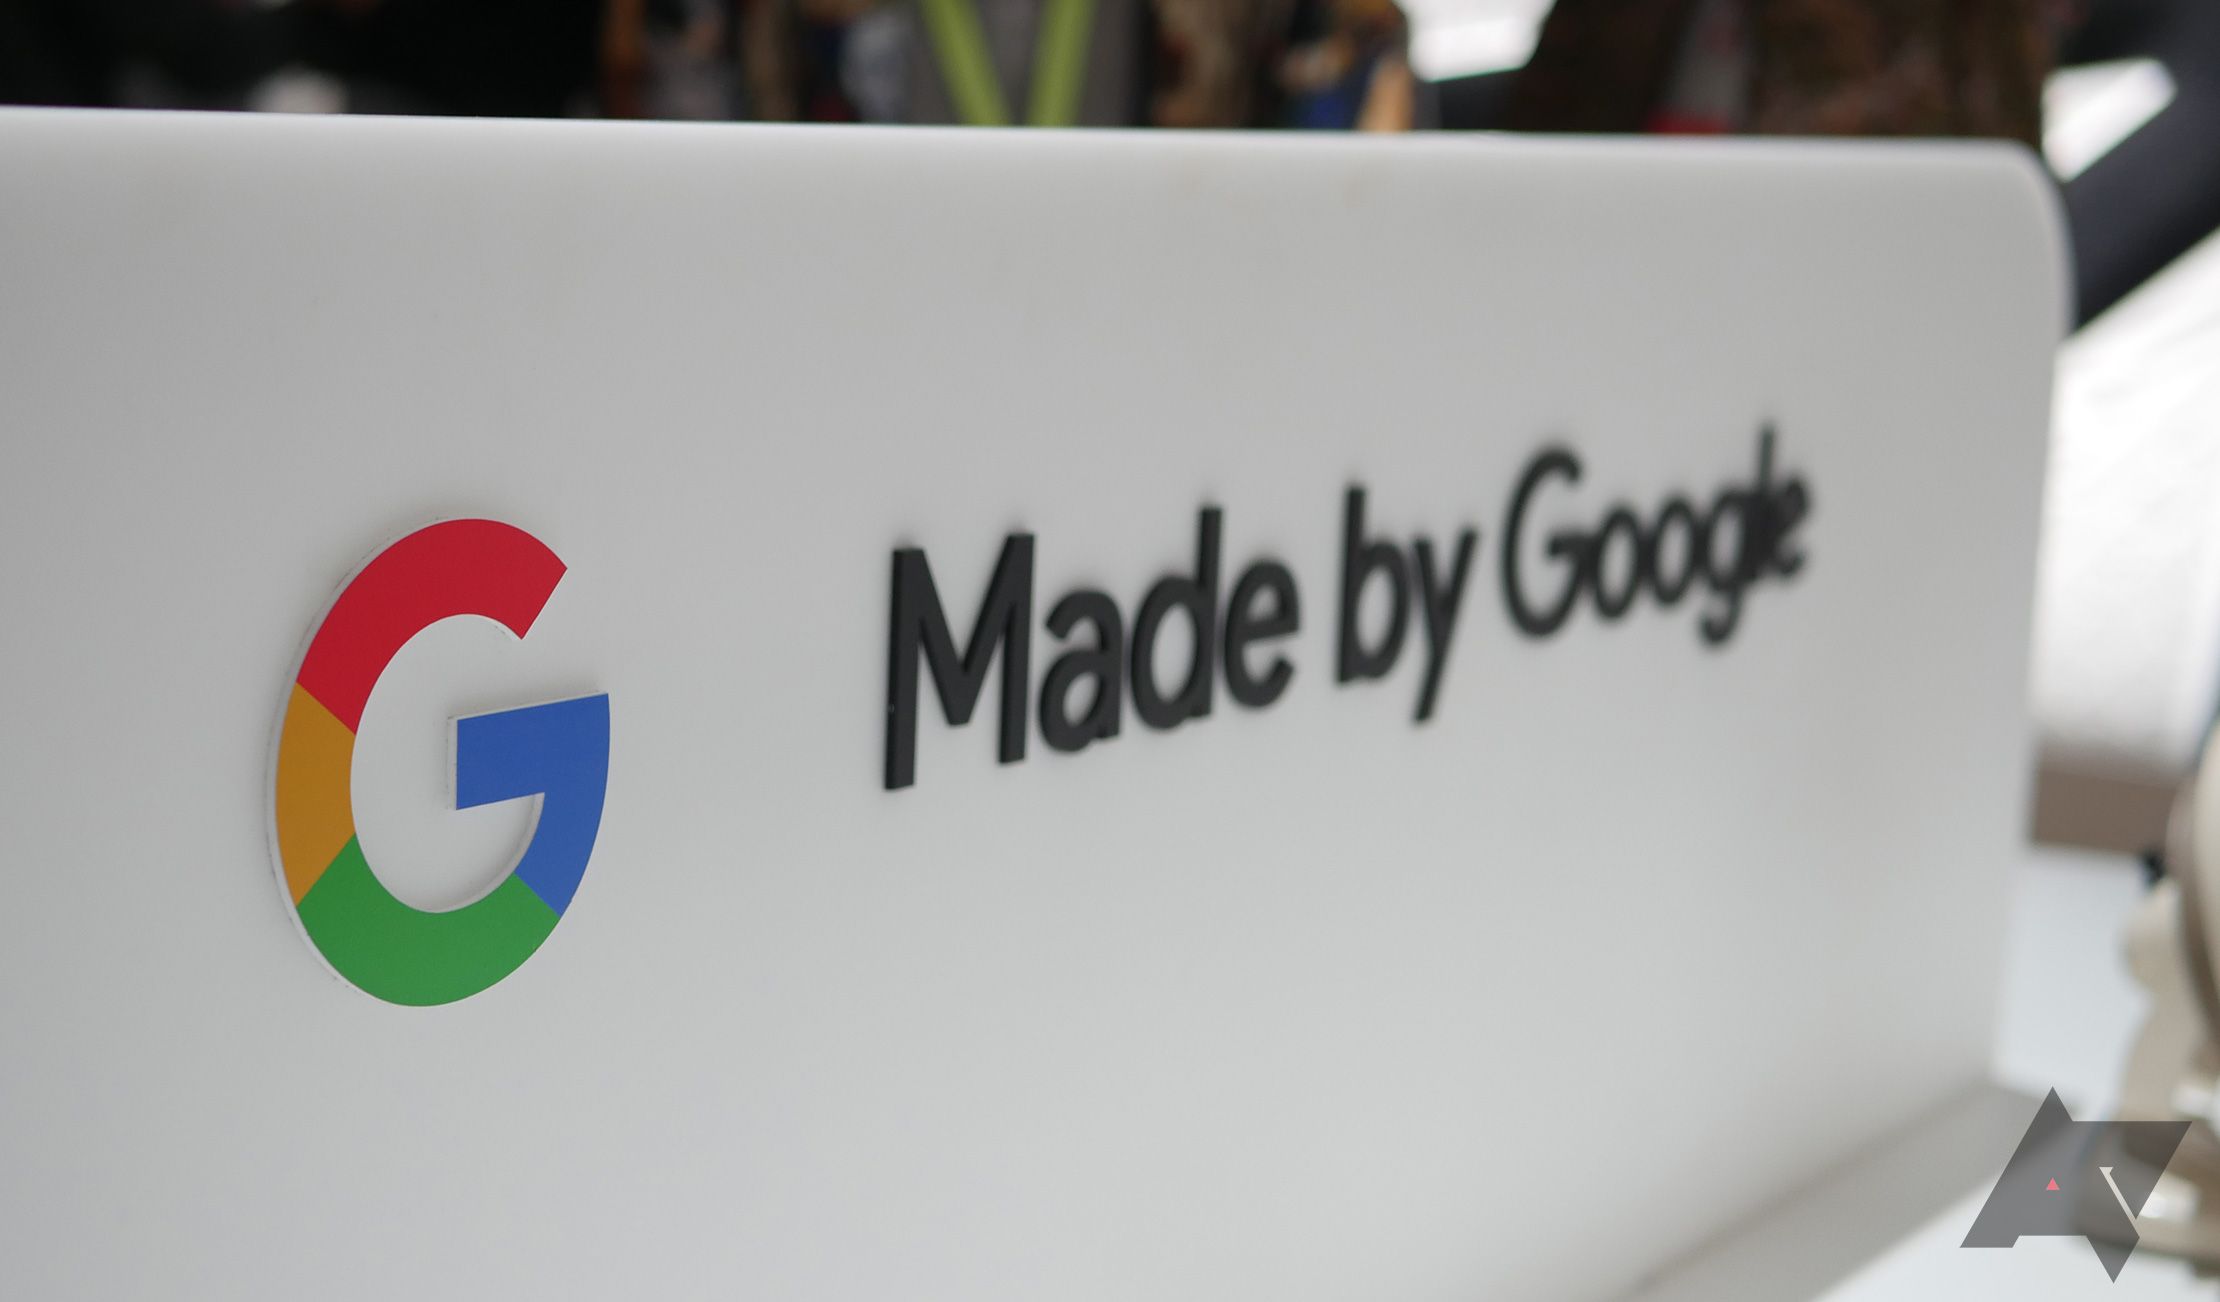 Tanda Made by Google dan logo Google.